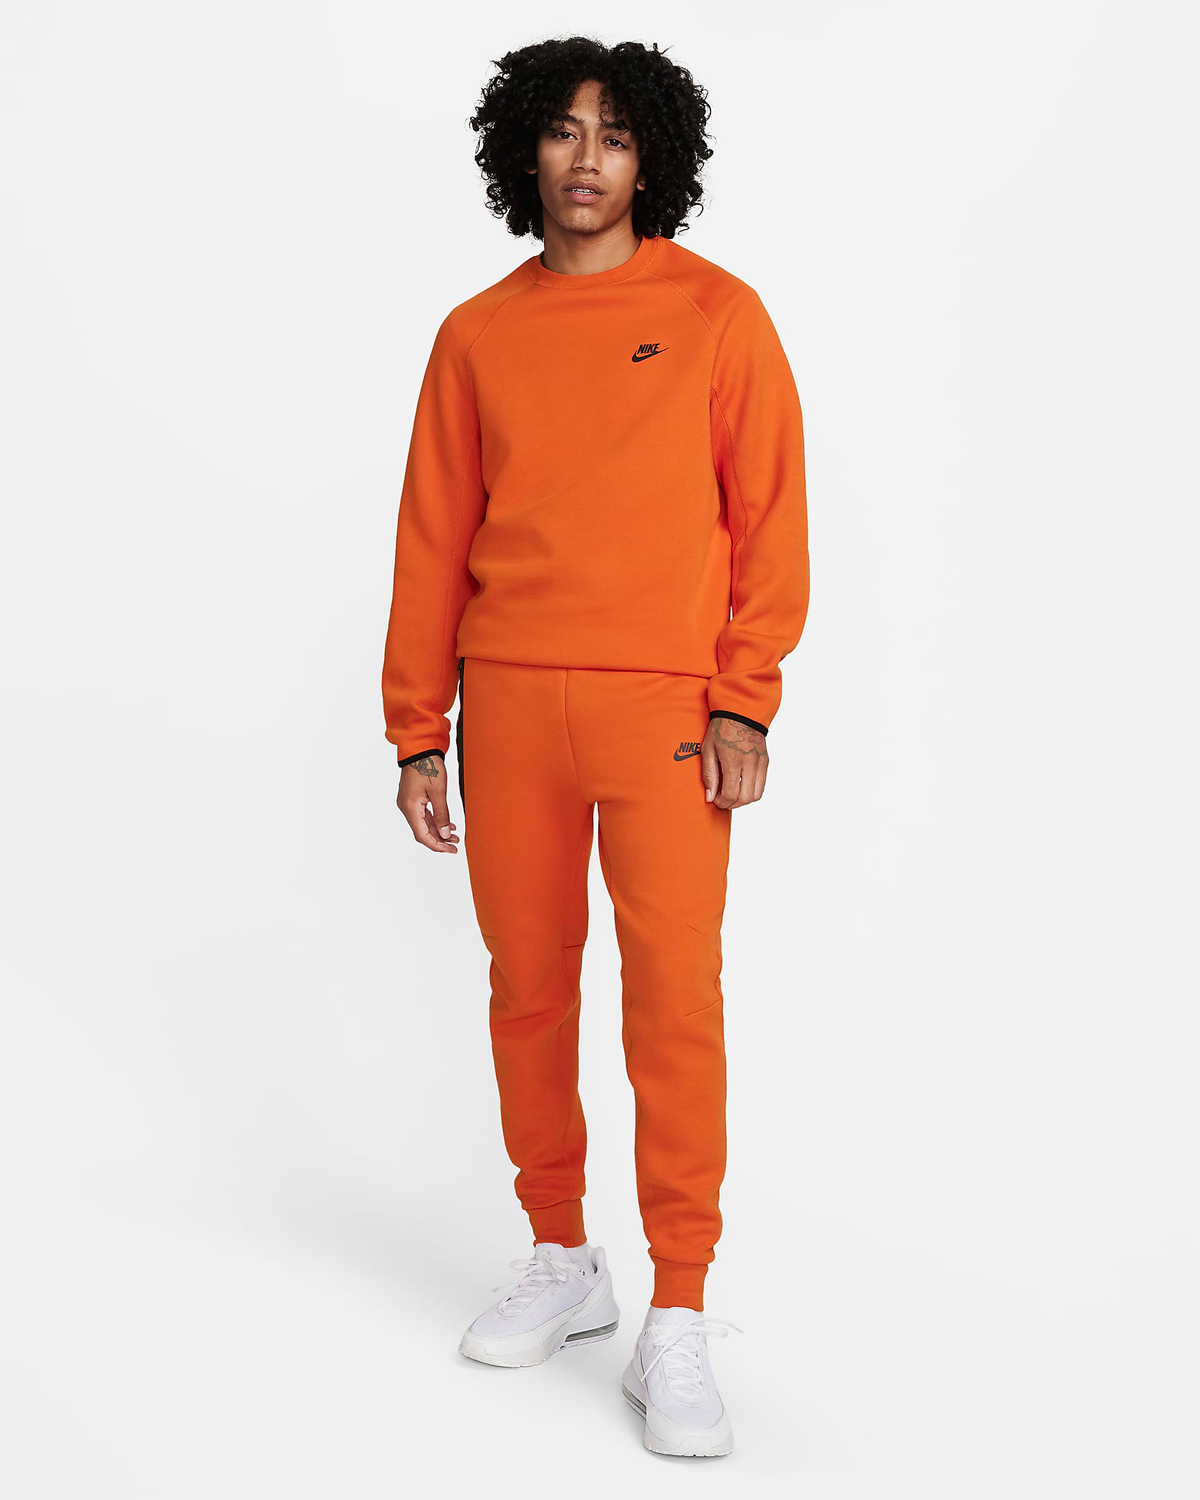 Nike-Tech-Fleece-Crew-Sweatshirt-Campfire-Orange-Black-Outfit